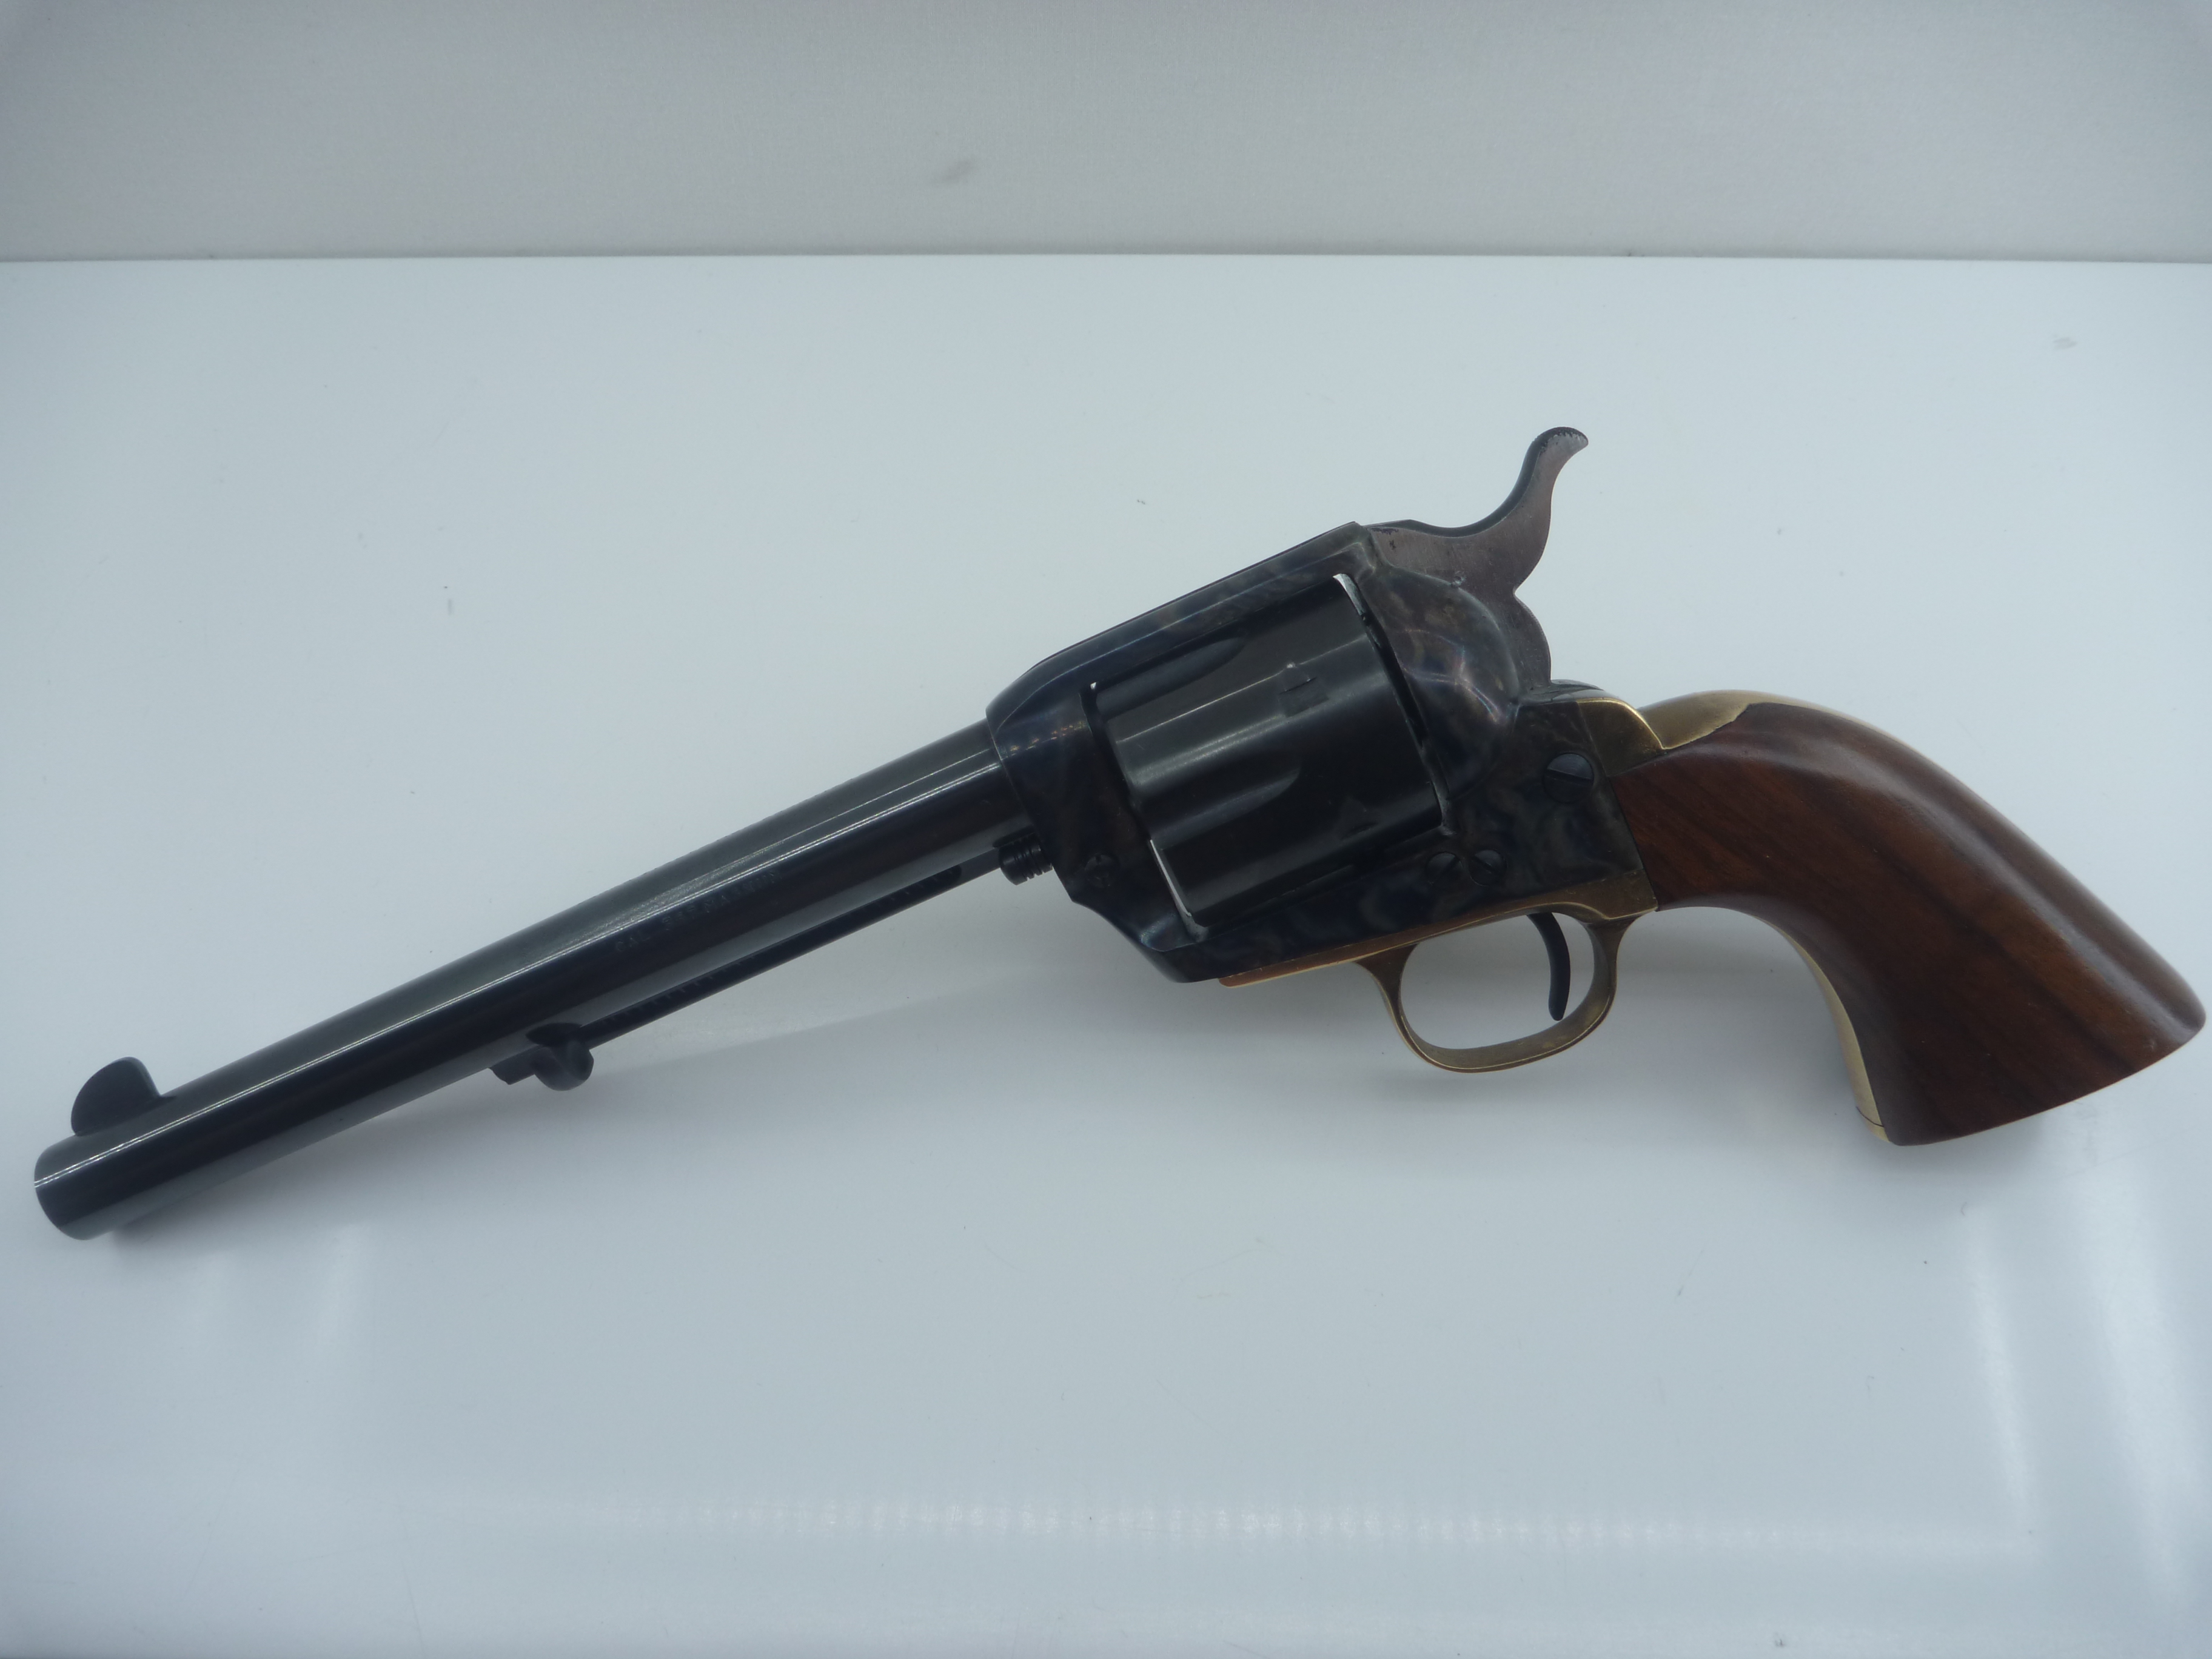 Armi Jager "Colt Frontier" - Cal. .357 Magnum [W298]